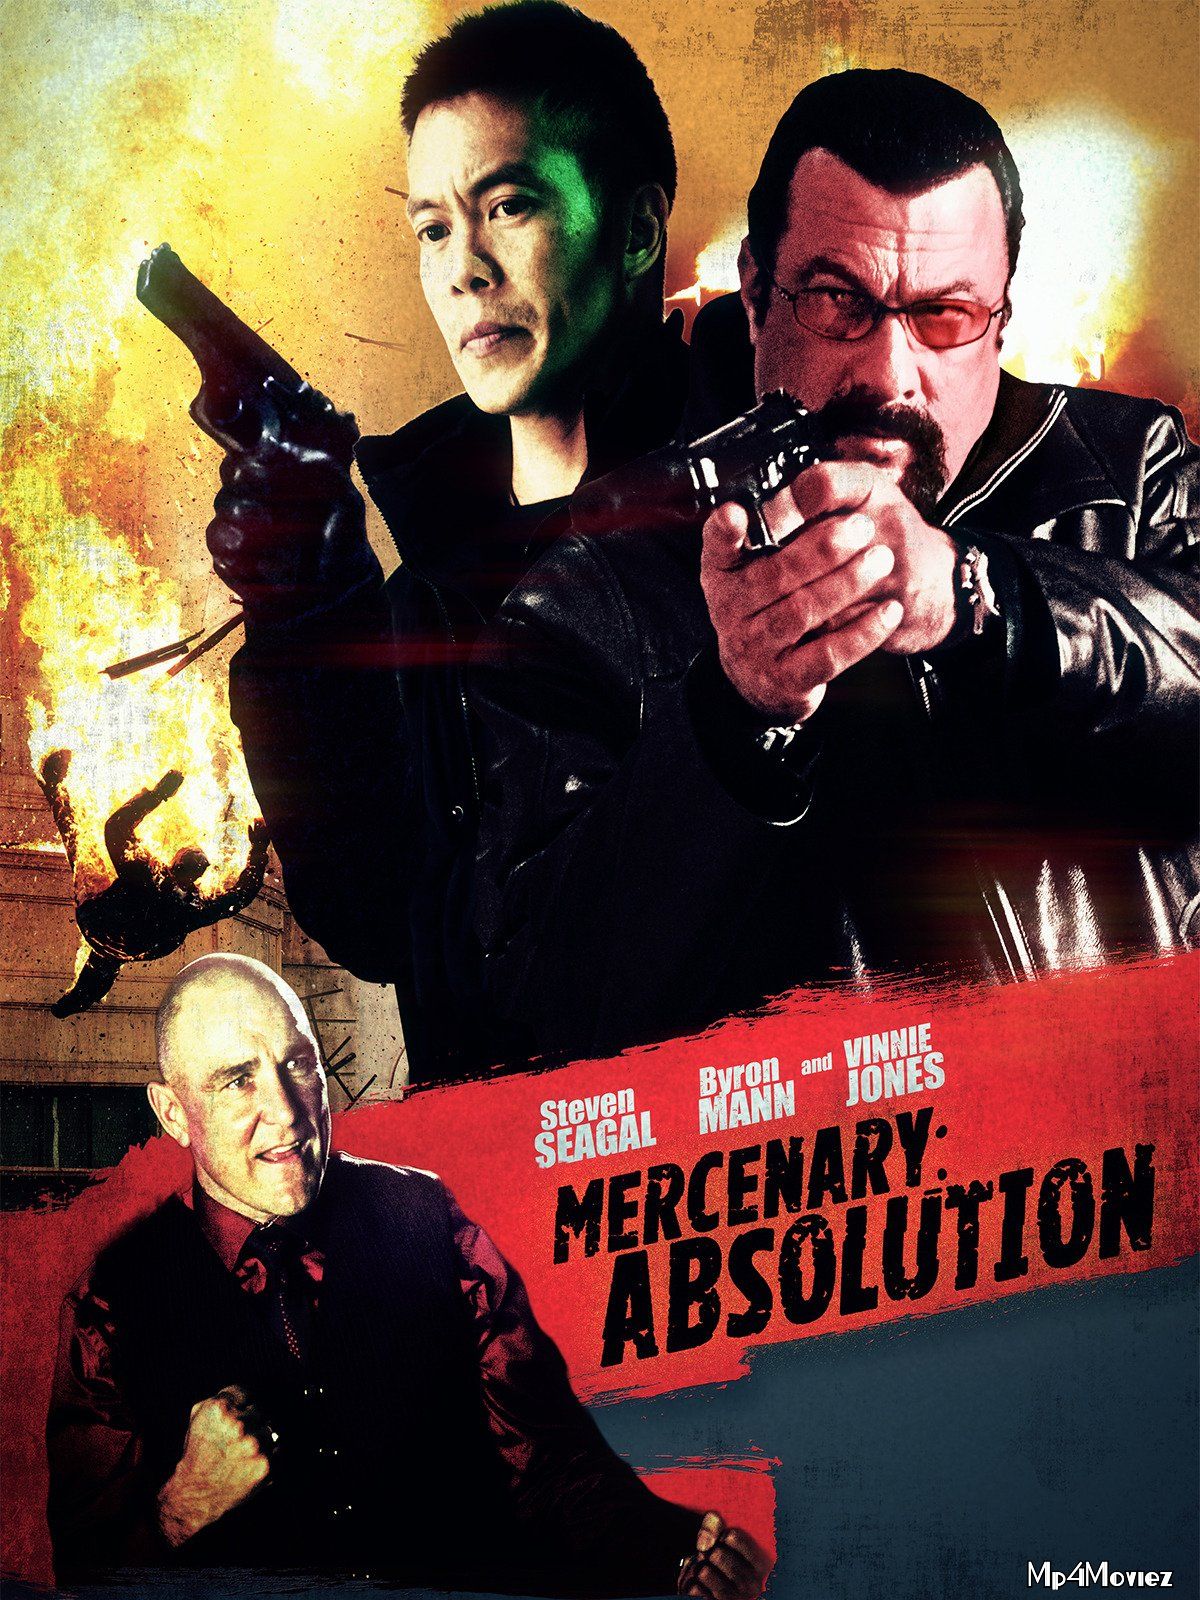 Mercenary: Absolution (2015) Hindi Dubbed UNCUT BRRip download full movie